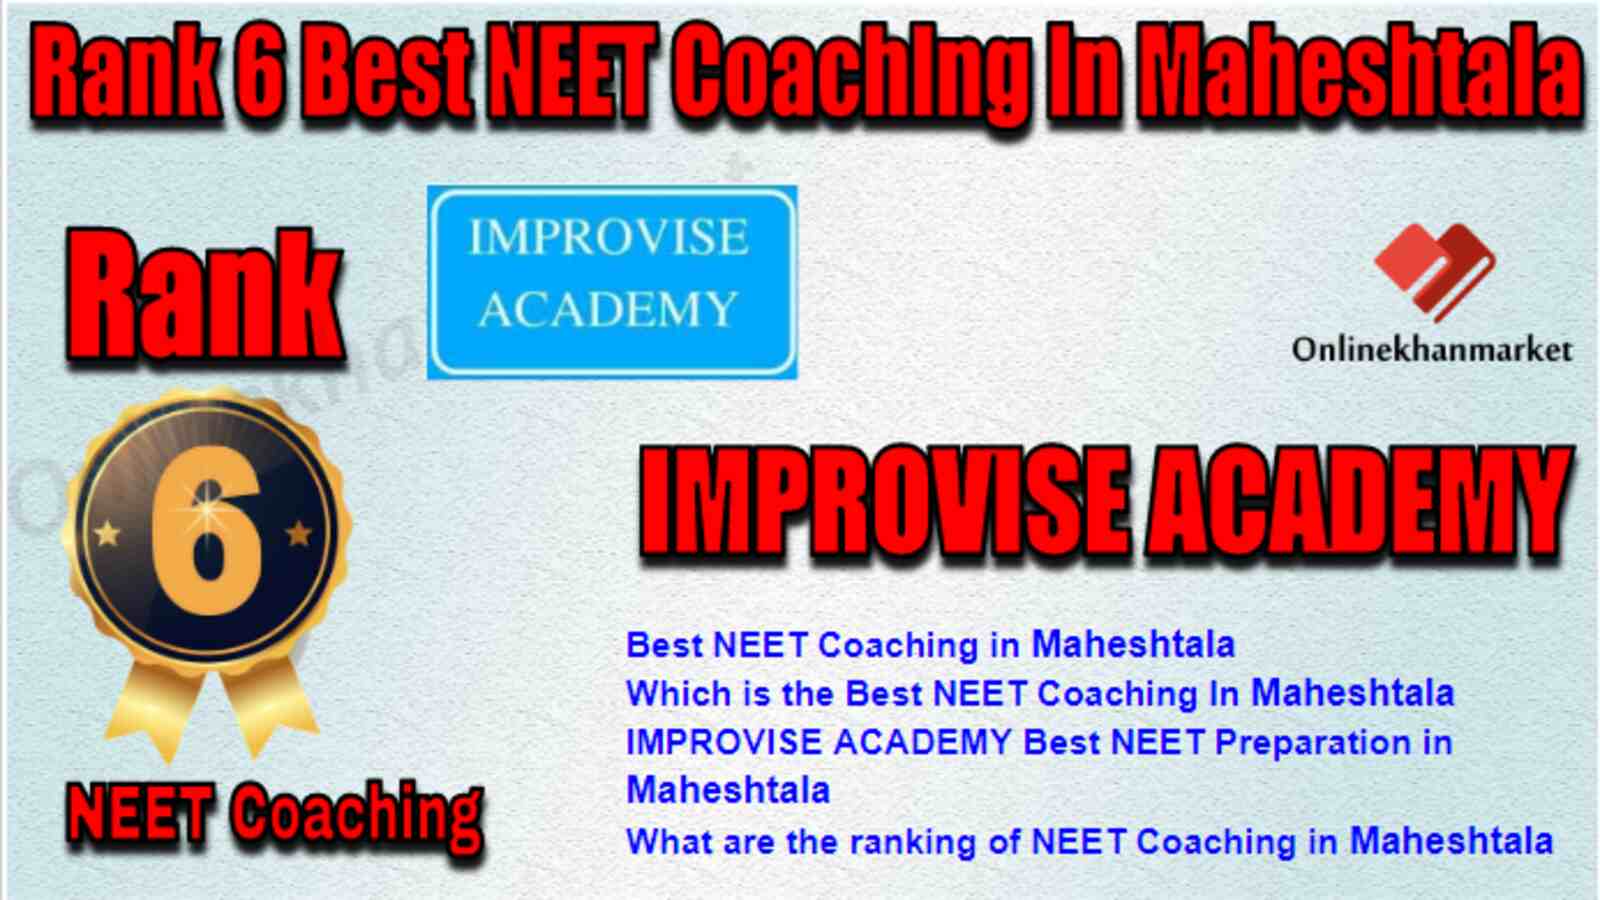 Rank 6 Best NEET Coaching in Maheshtala